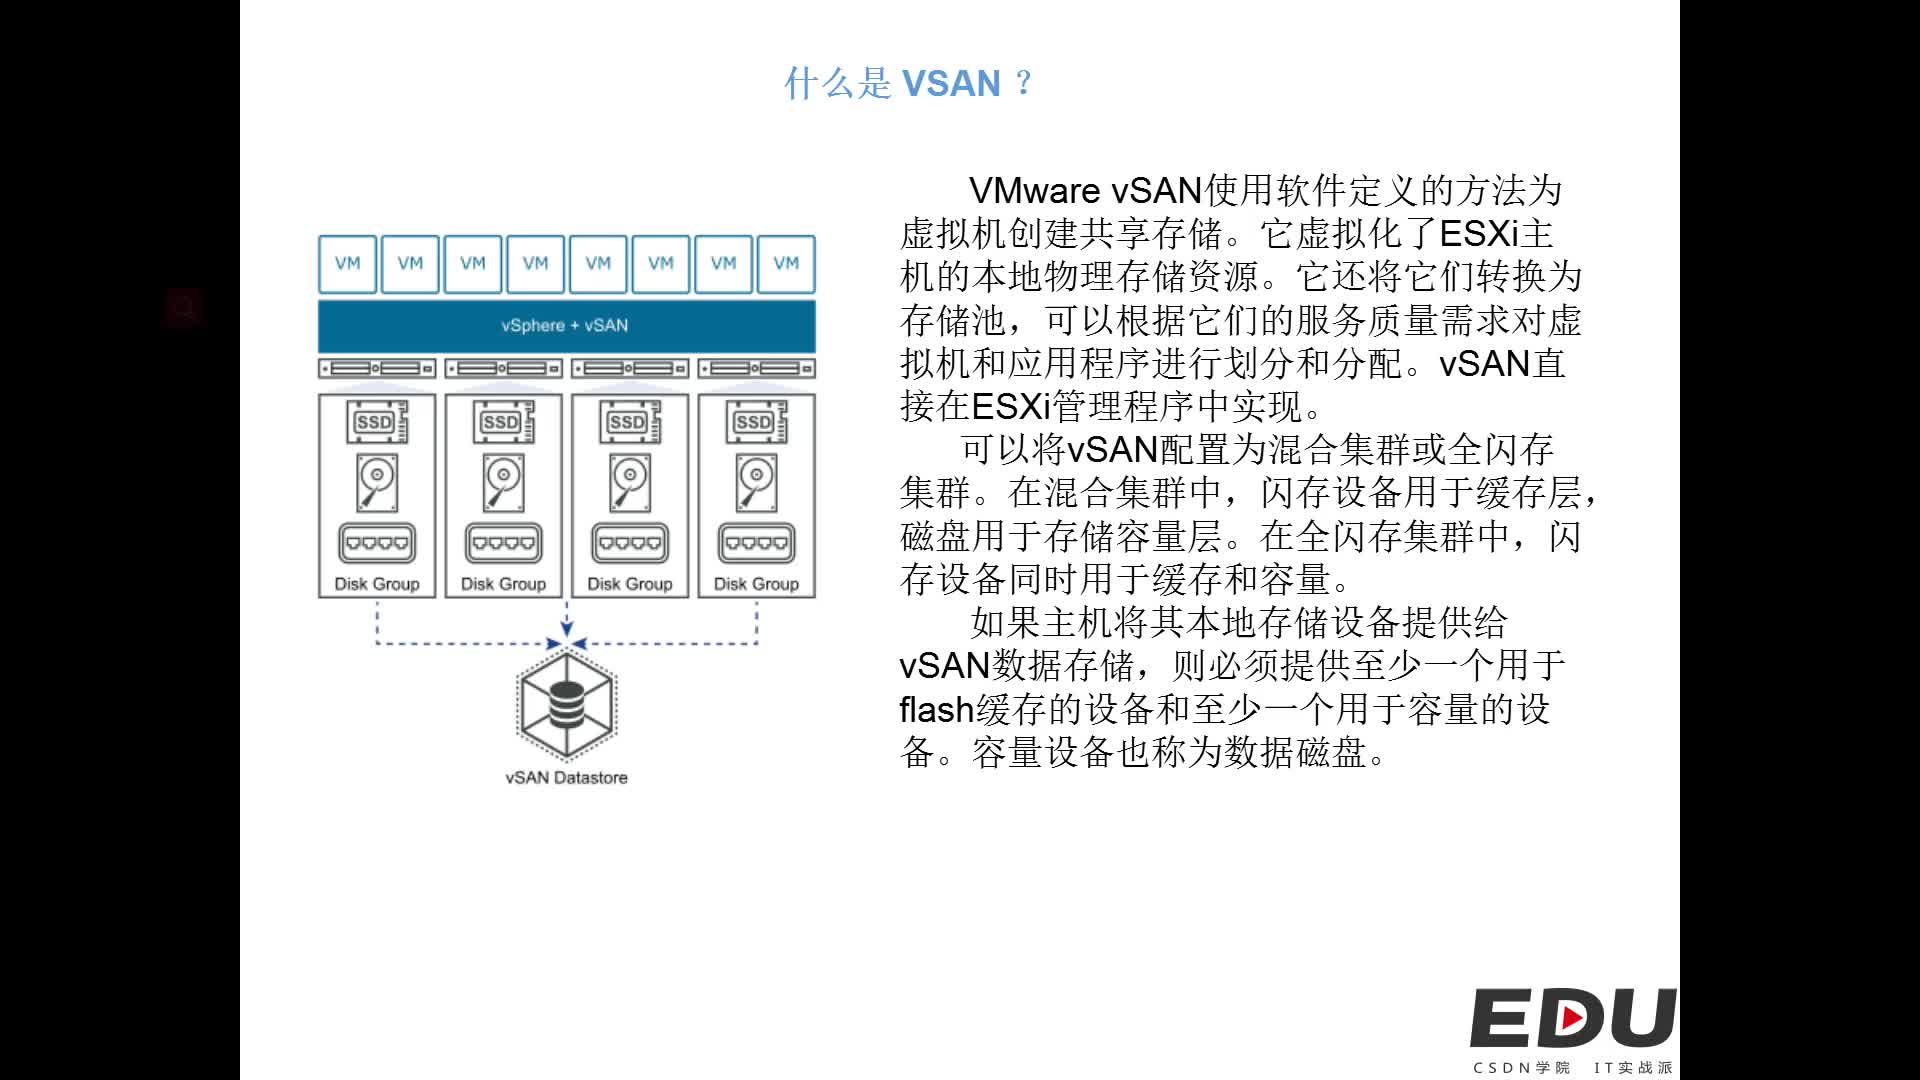 VSAN 6.7的安装部署和管理